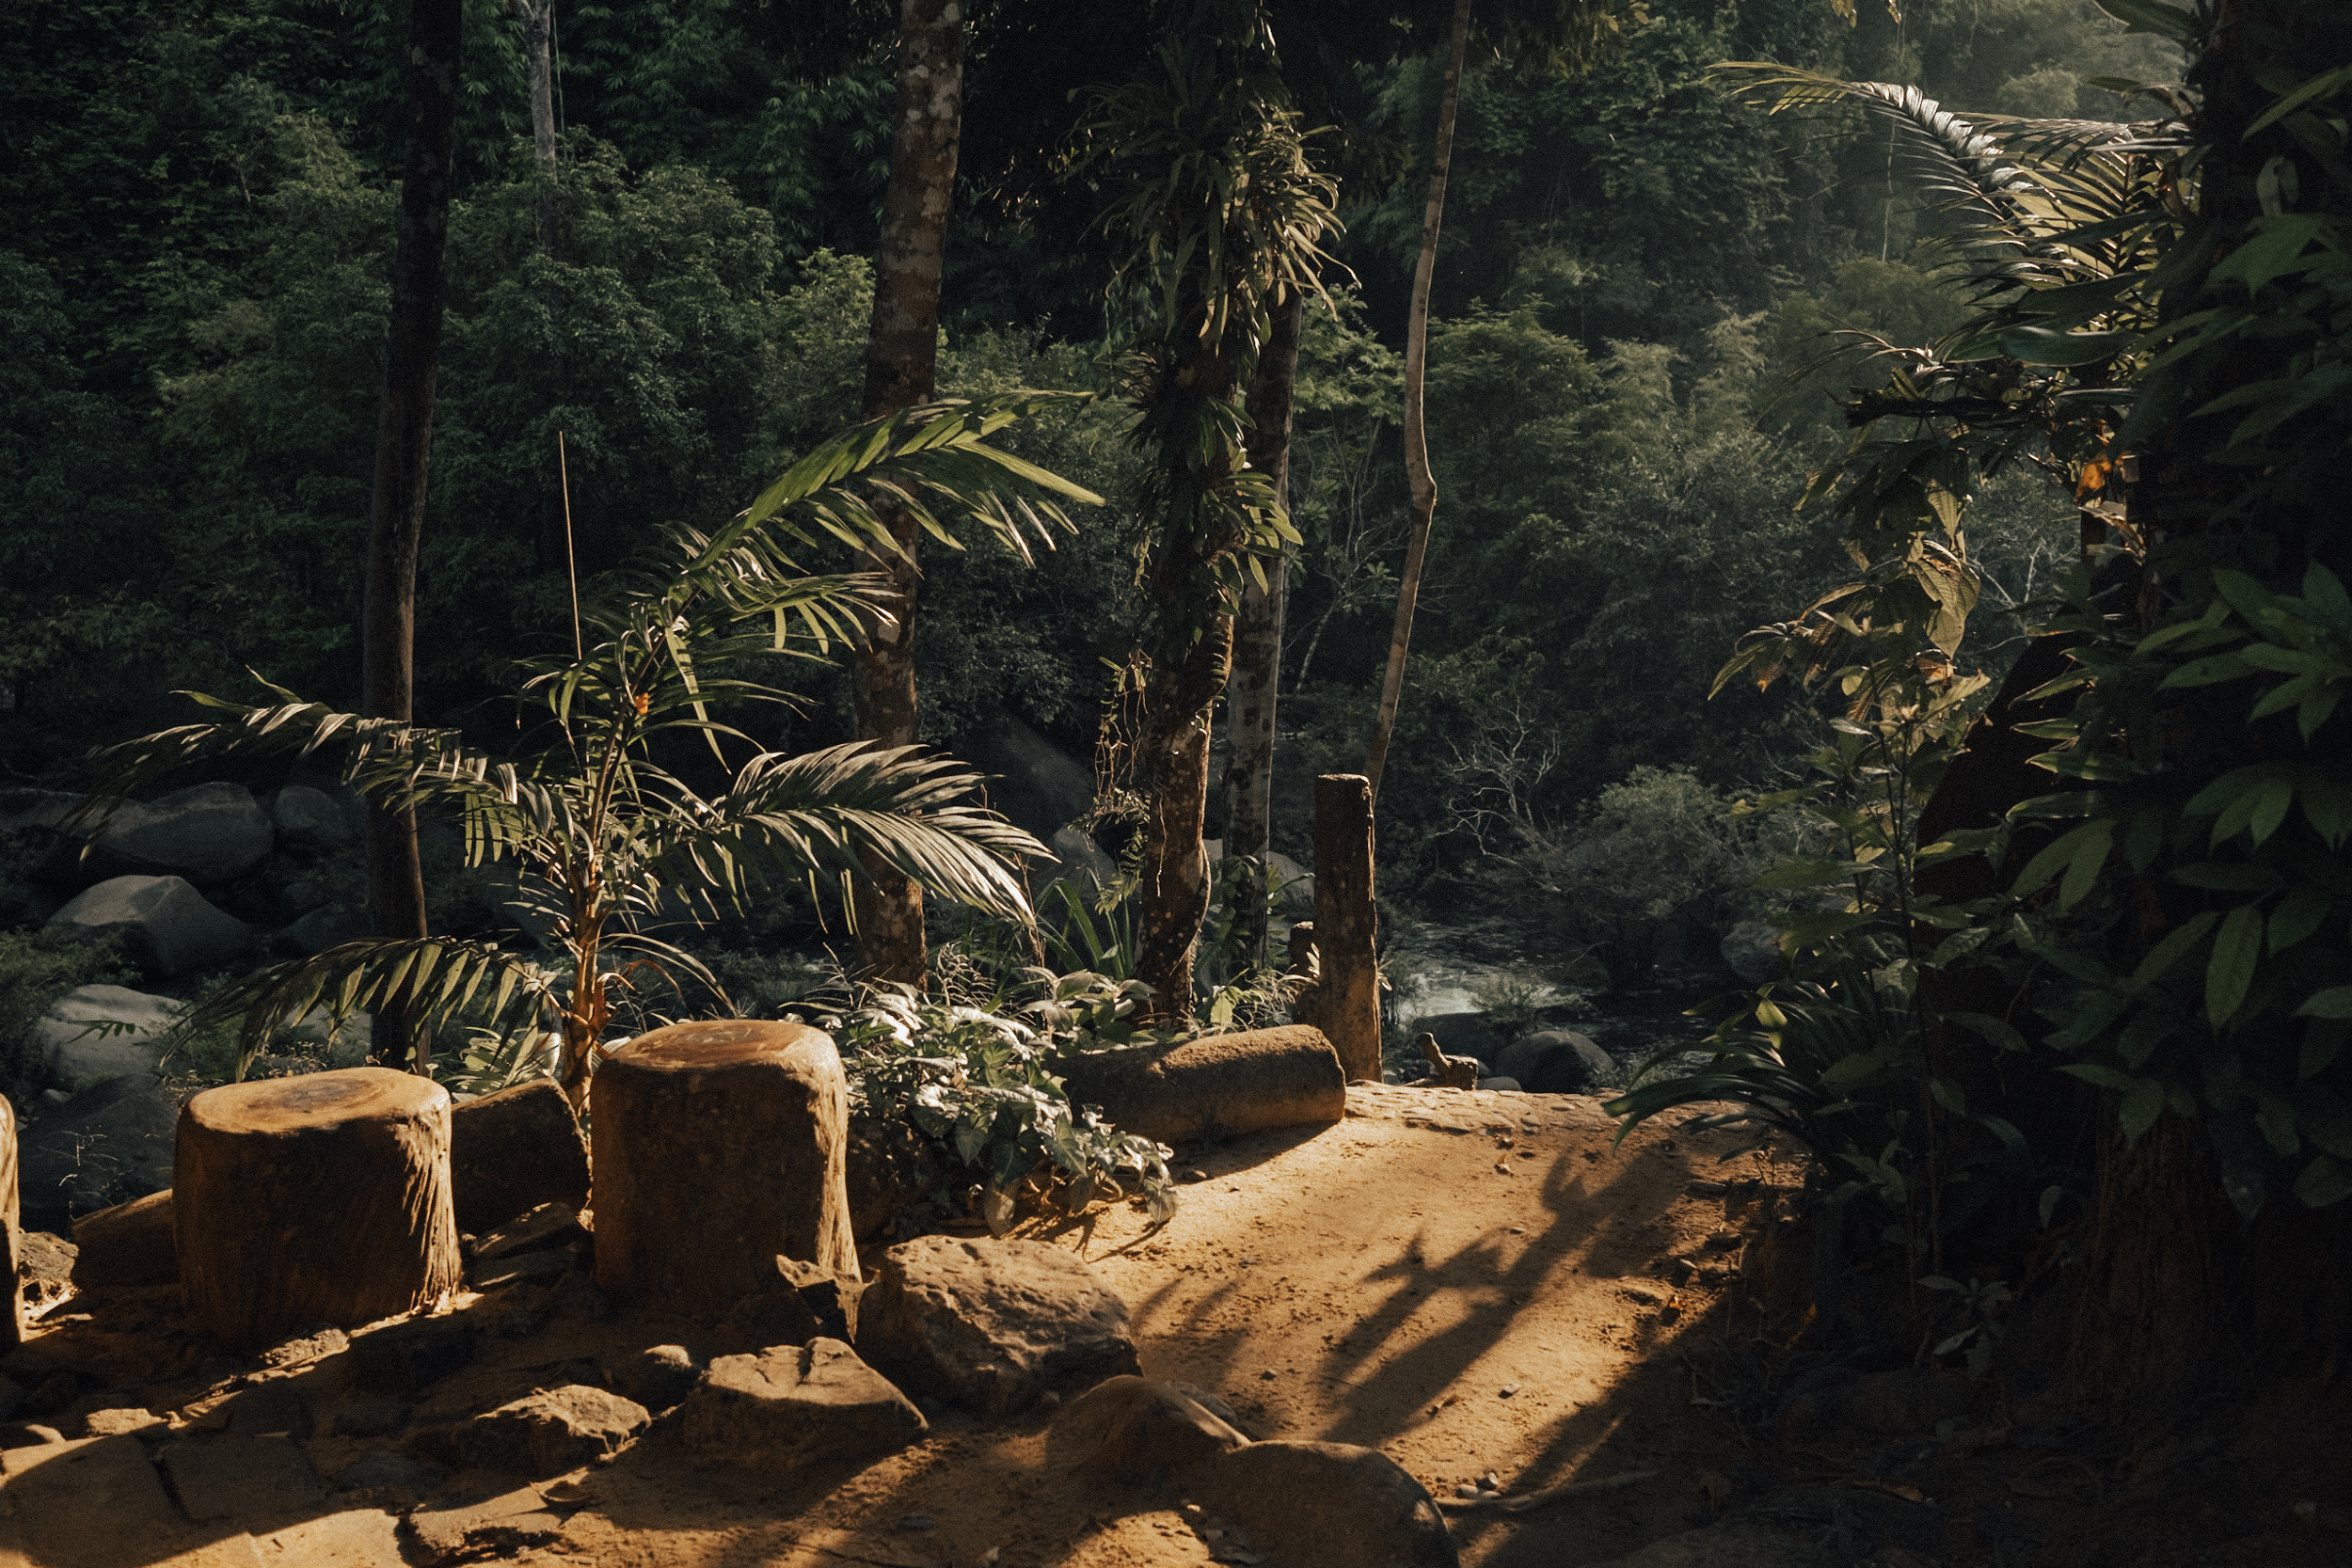 Thailand - A trip to the jungle